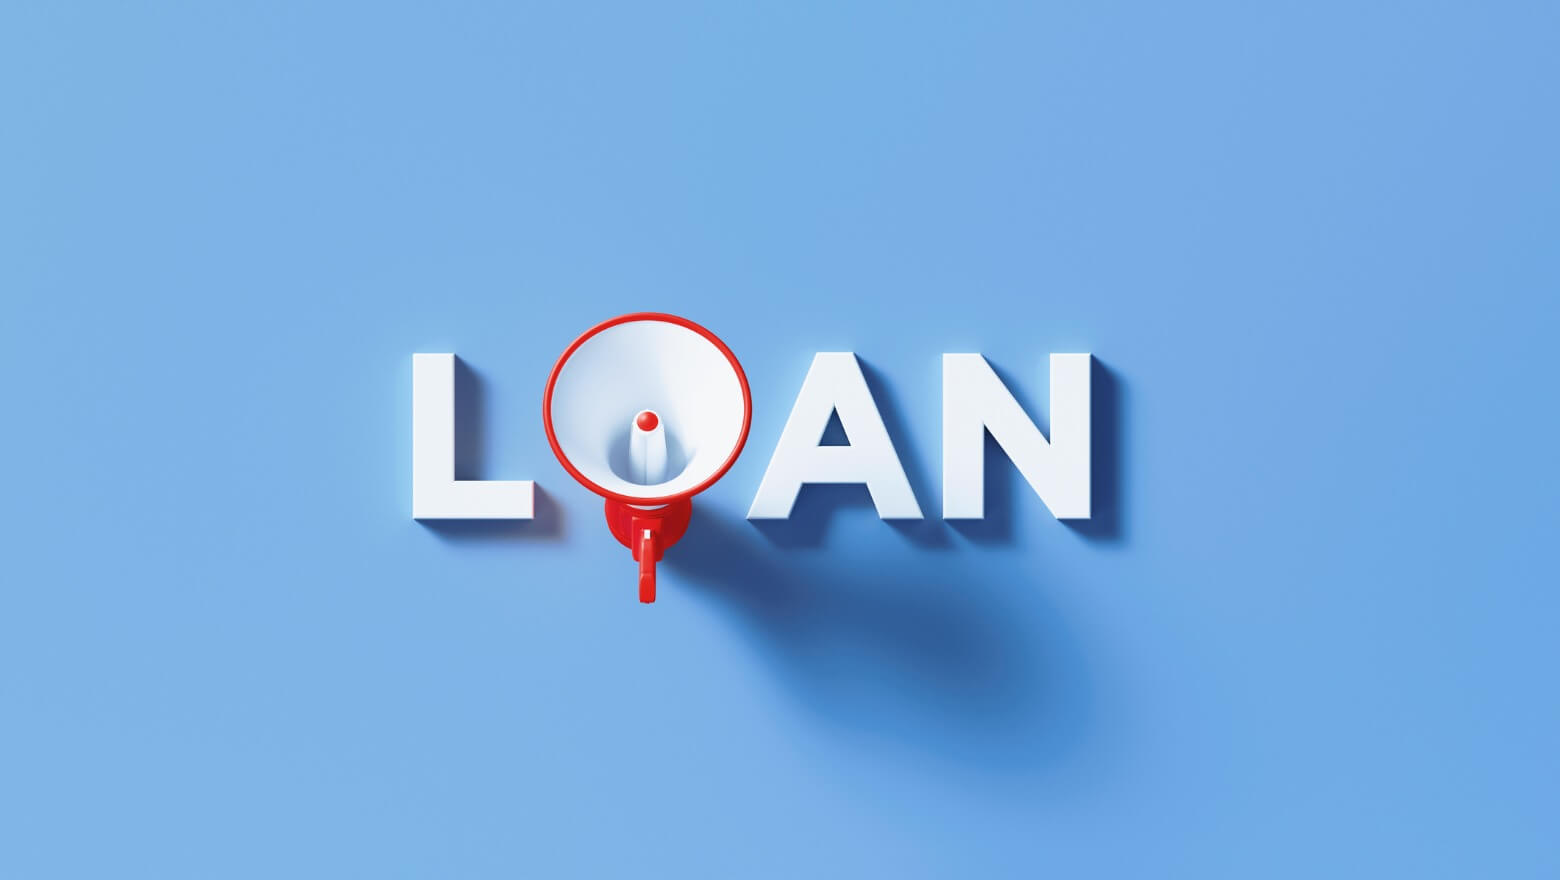 easy approval installment loans